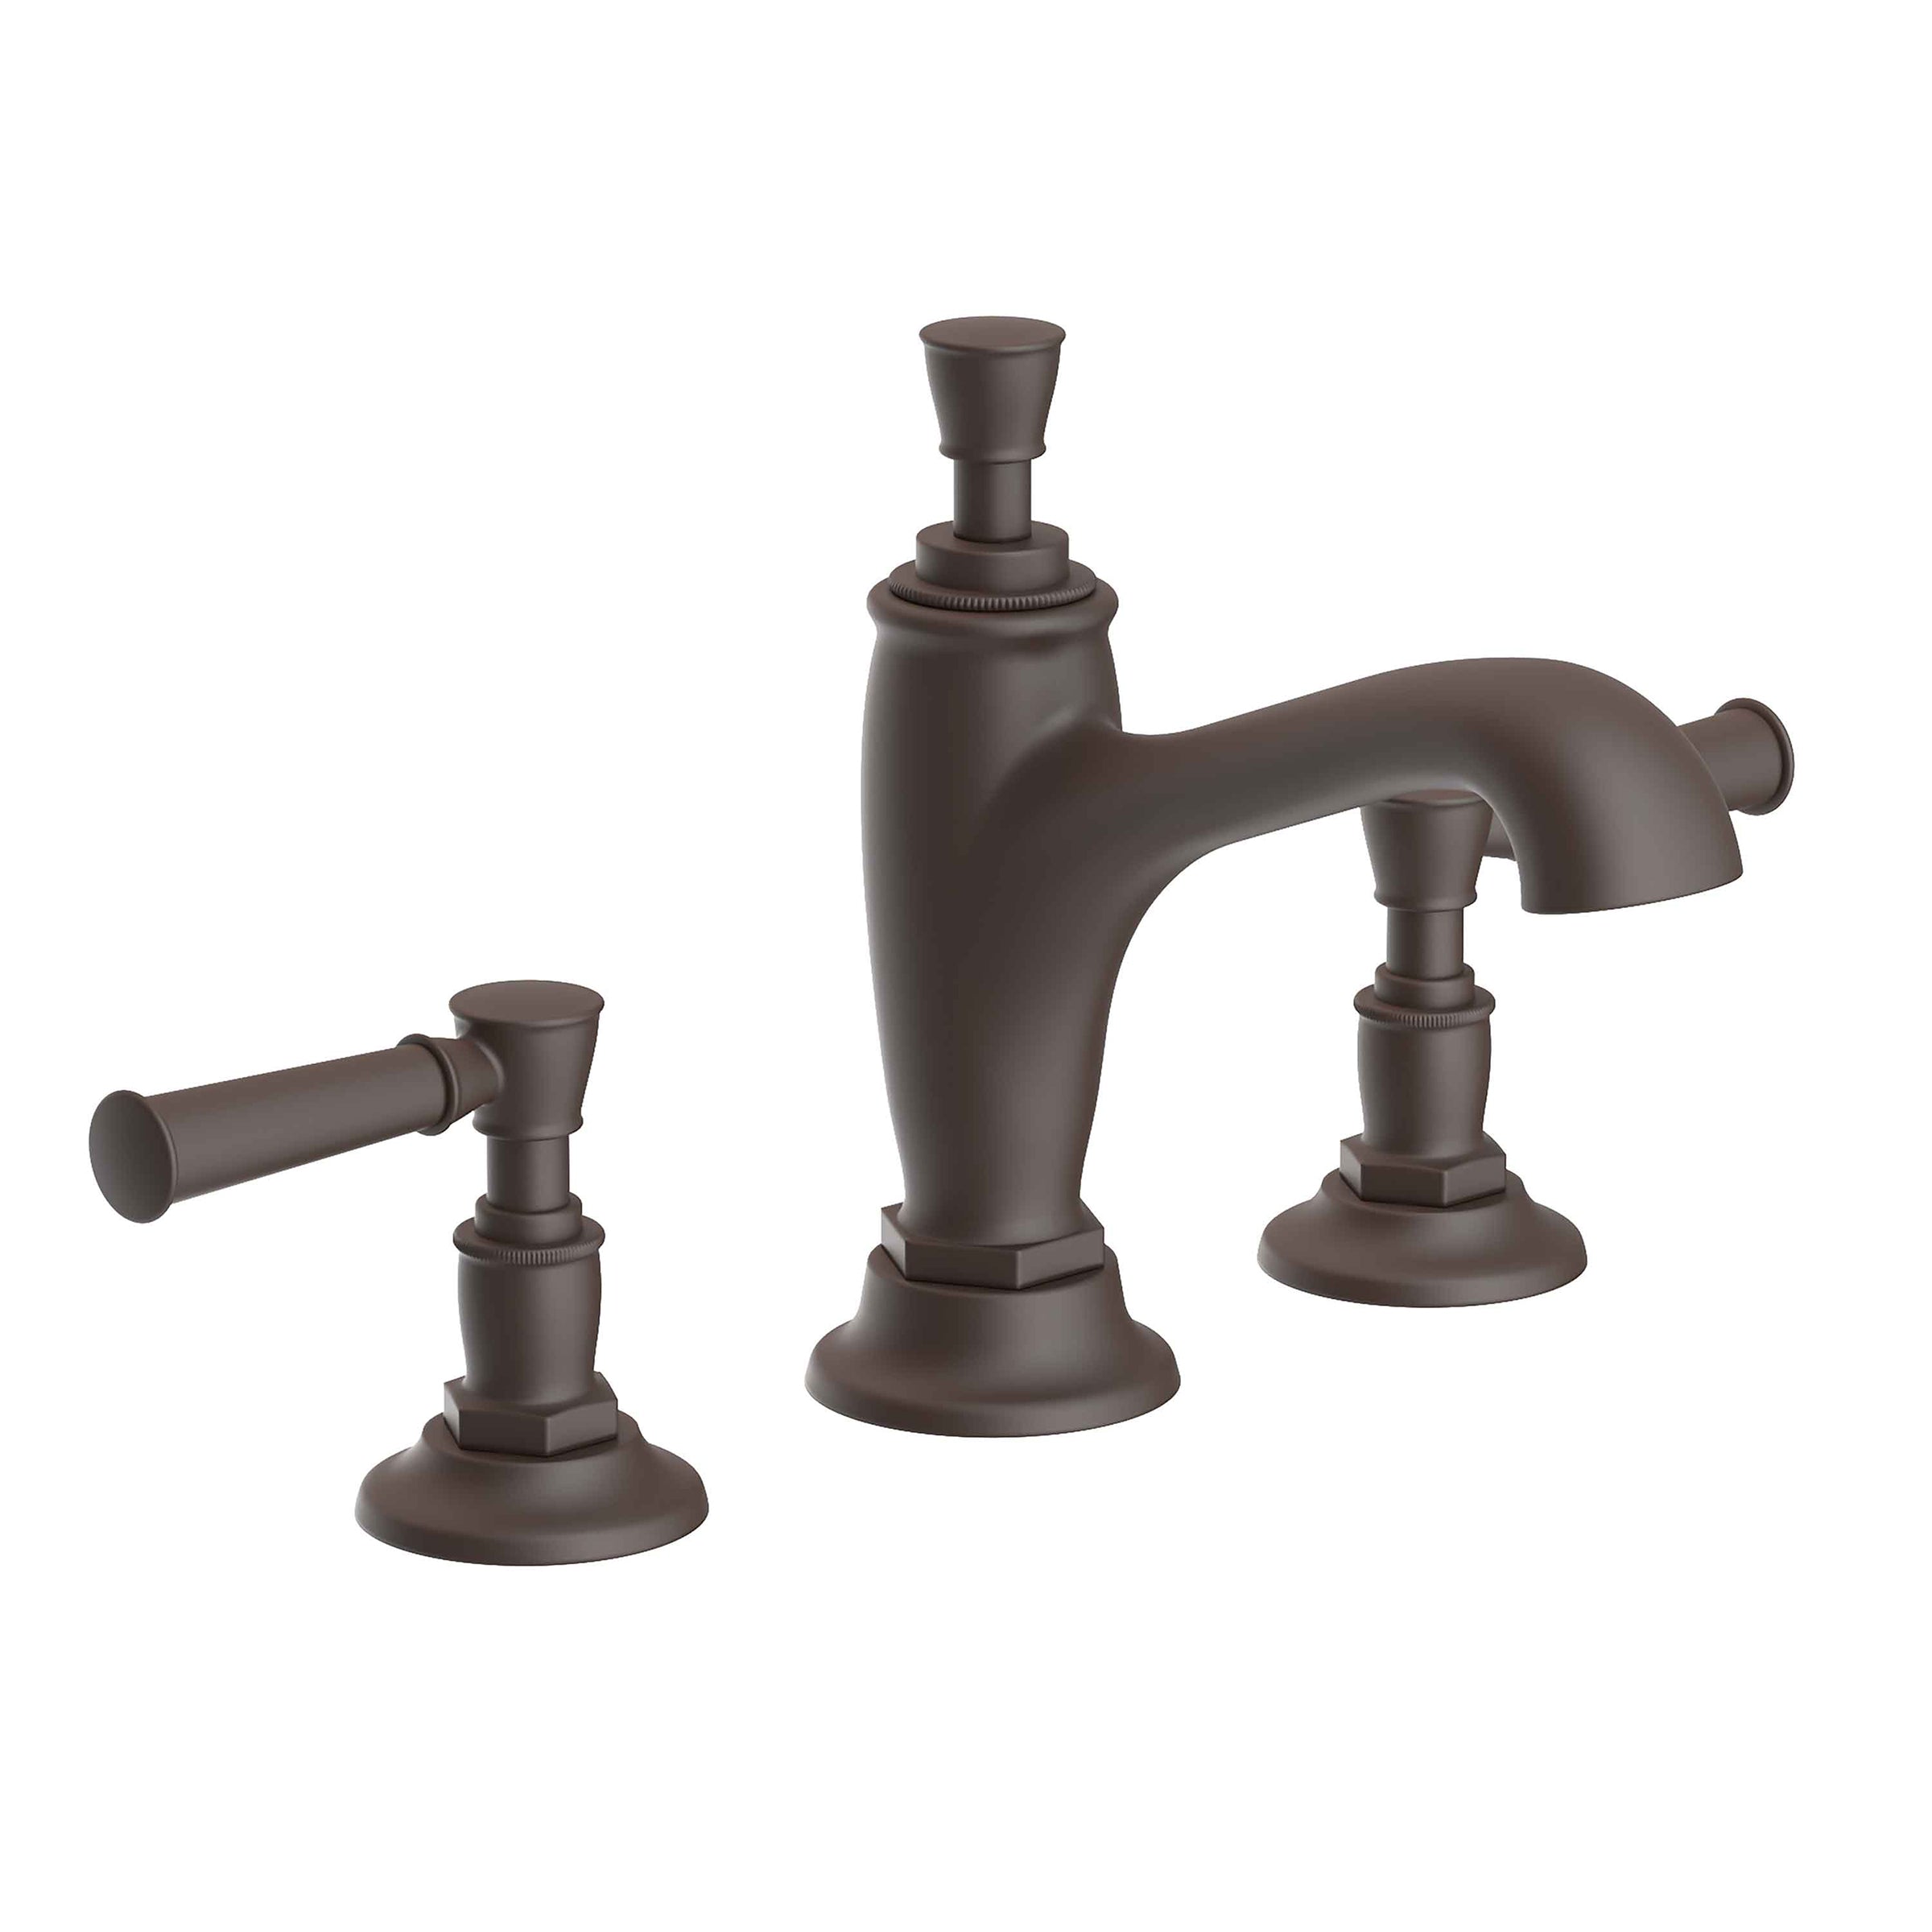 Newport Brass Vander Widespread Lavatory Faucet